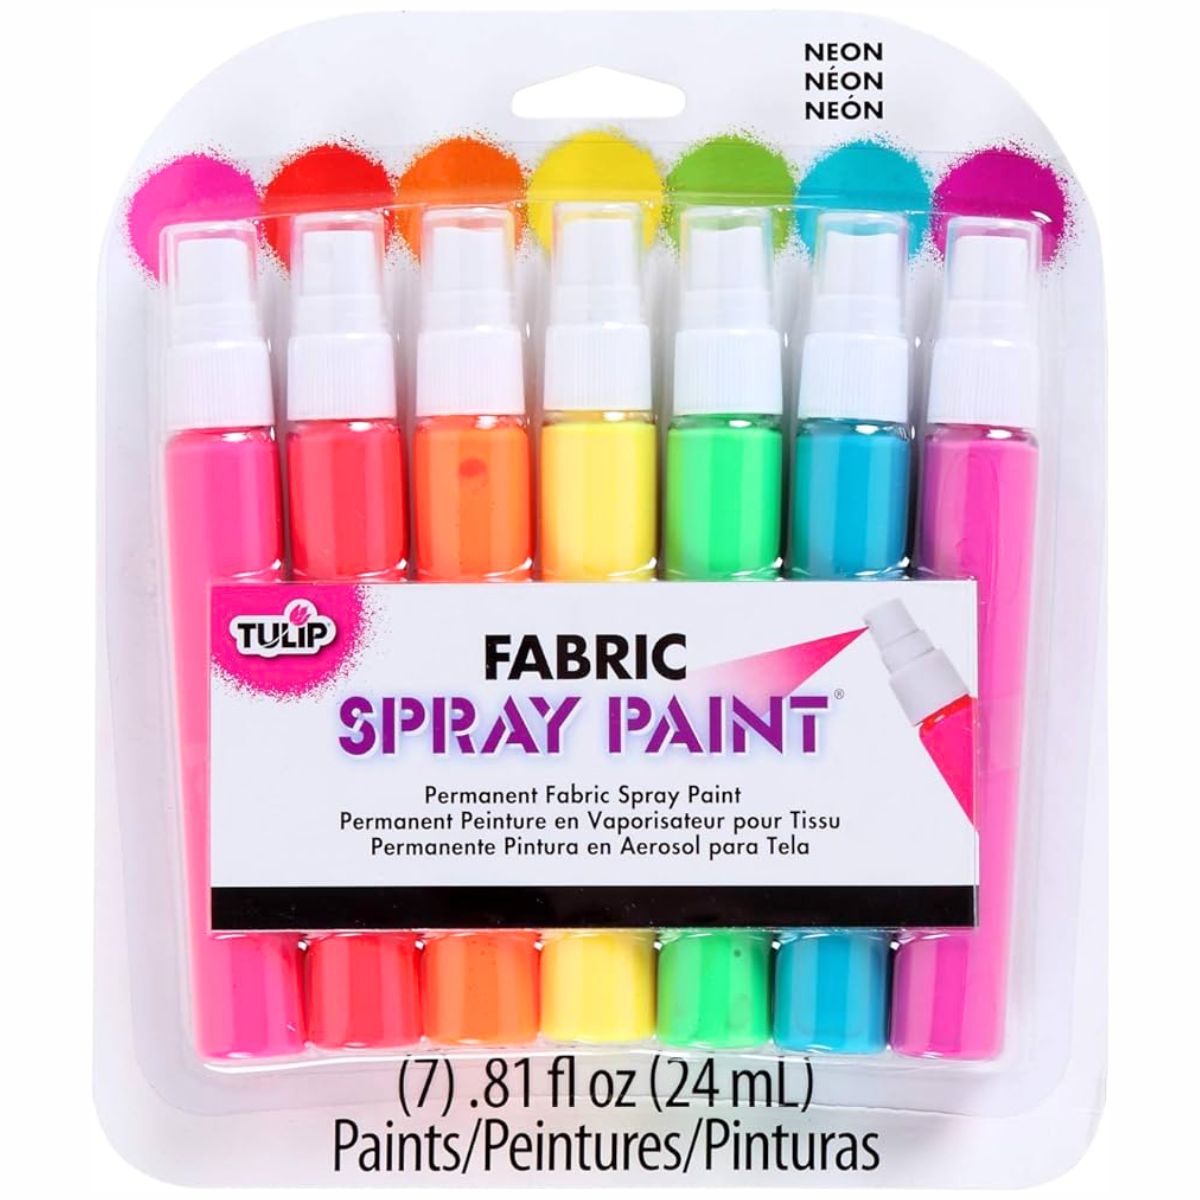 Fabric Spray Paint Mini Pack Neon / Pintura para Tela en Spray Neon